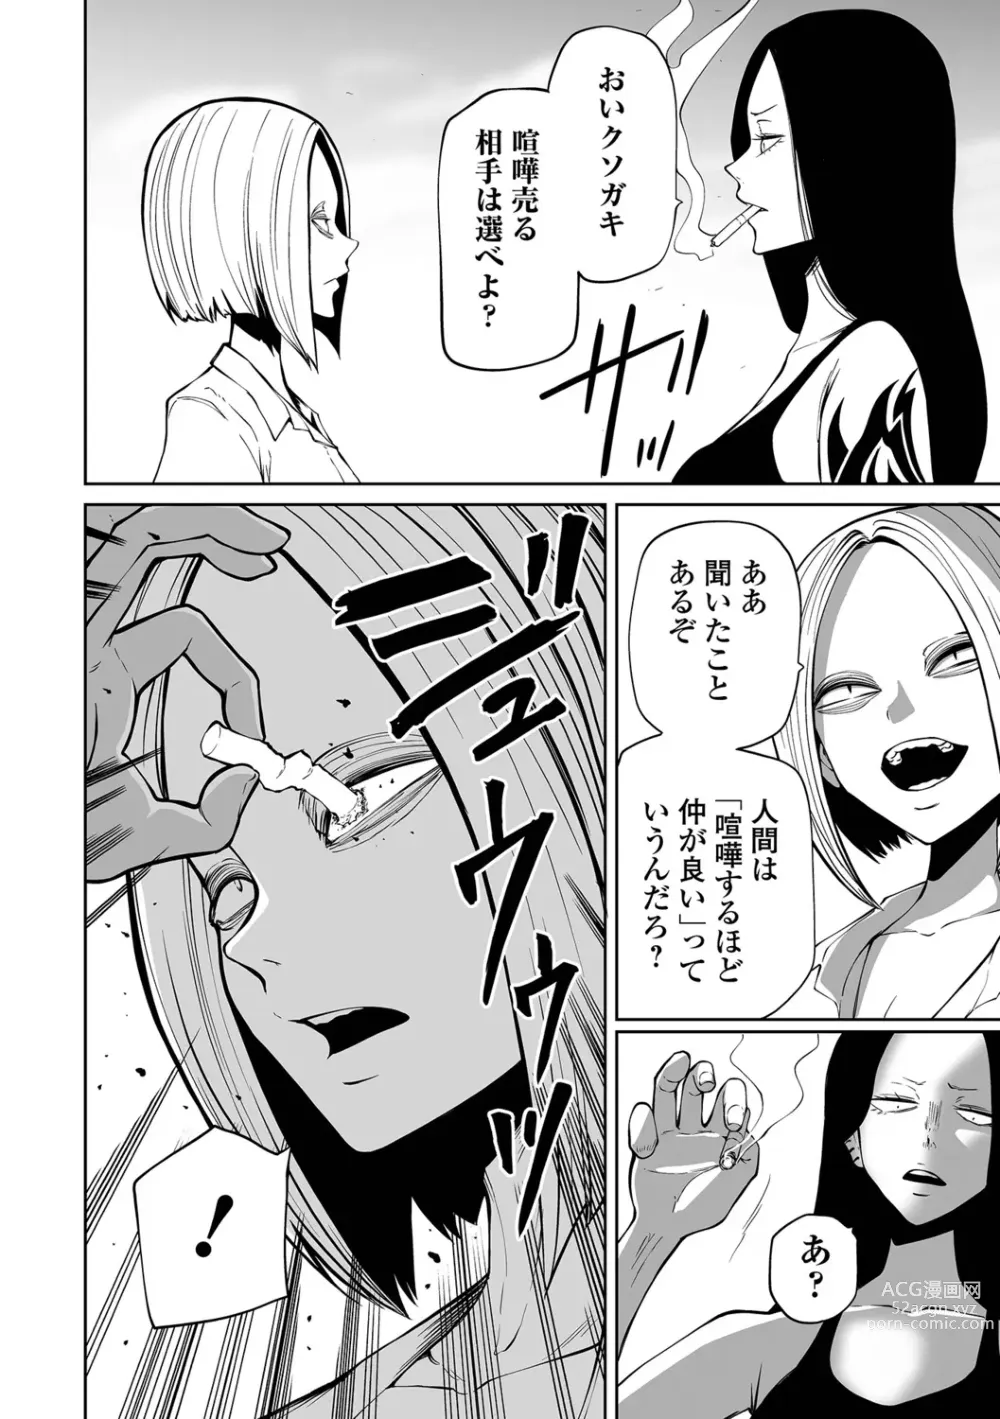 Page 6 of manga Ryona King Vol.23